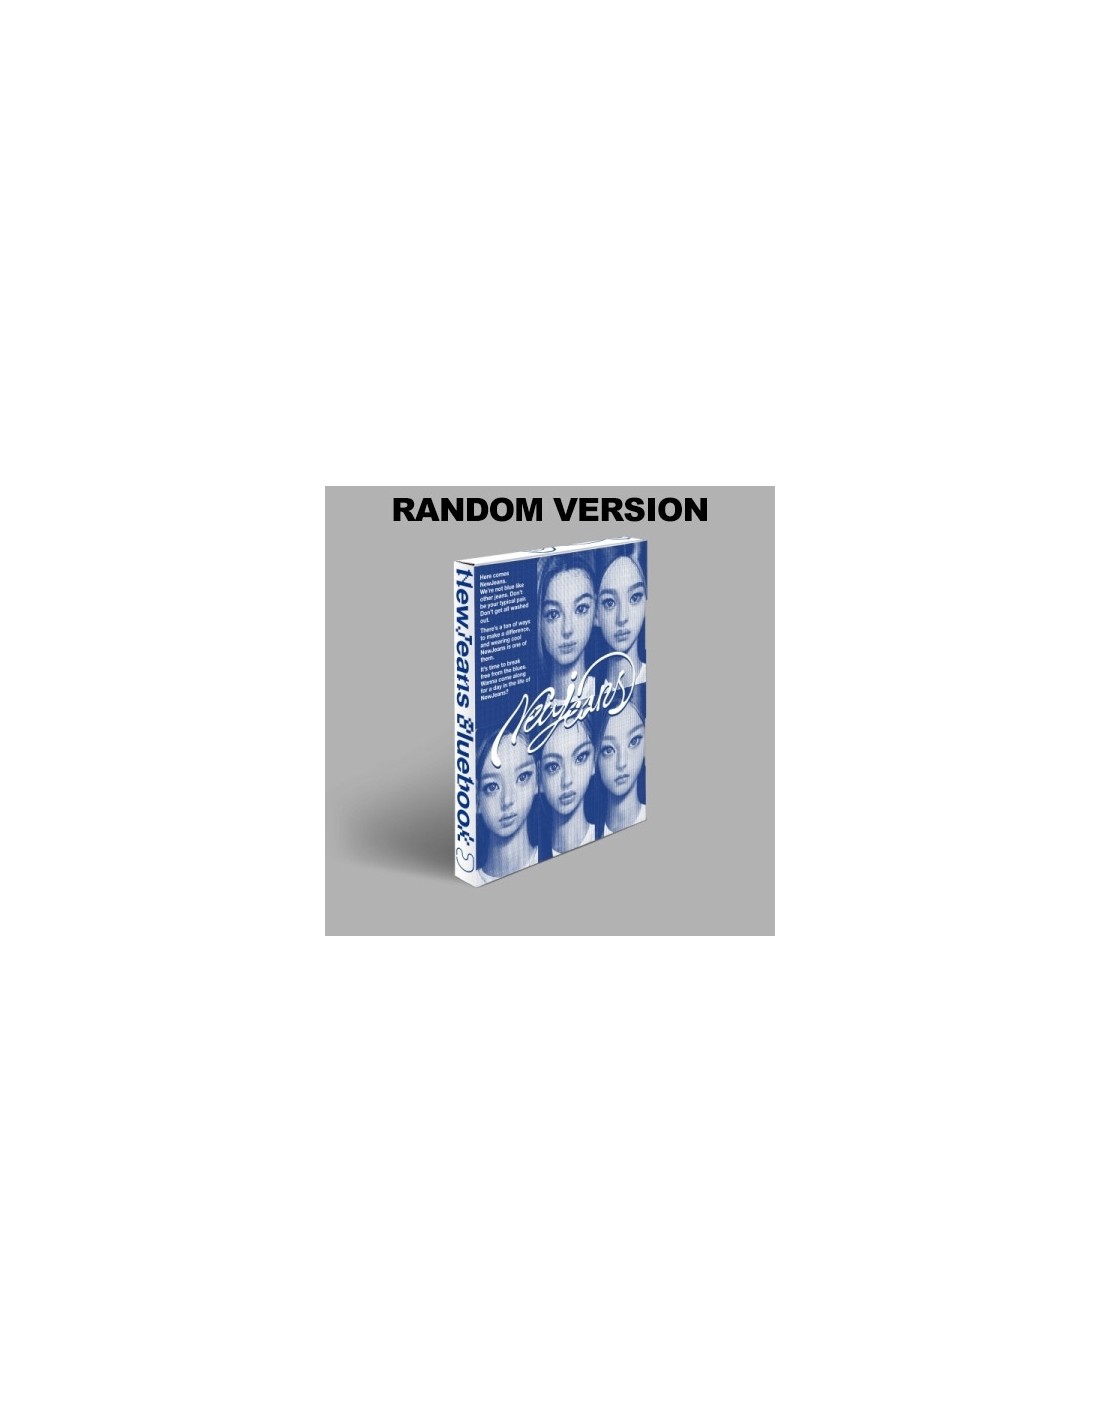 Bluebook Ver.] NewJeans 1st EP Album - New Jeans (Random Ver.) CD